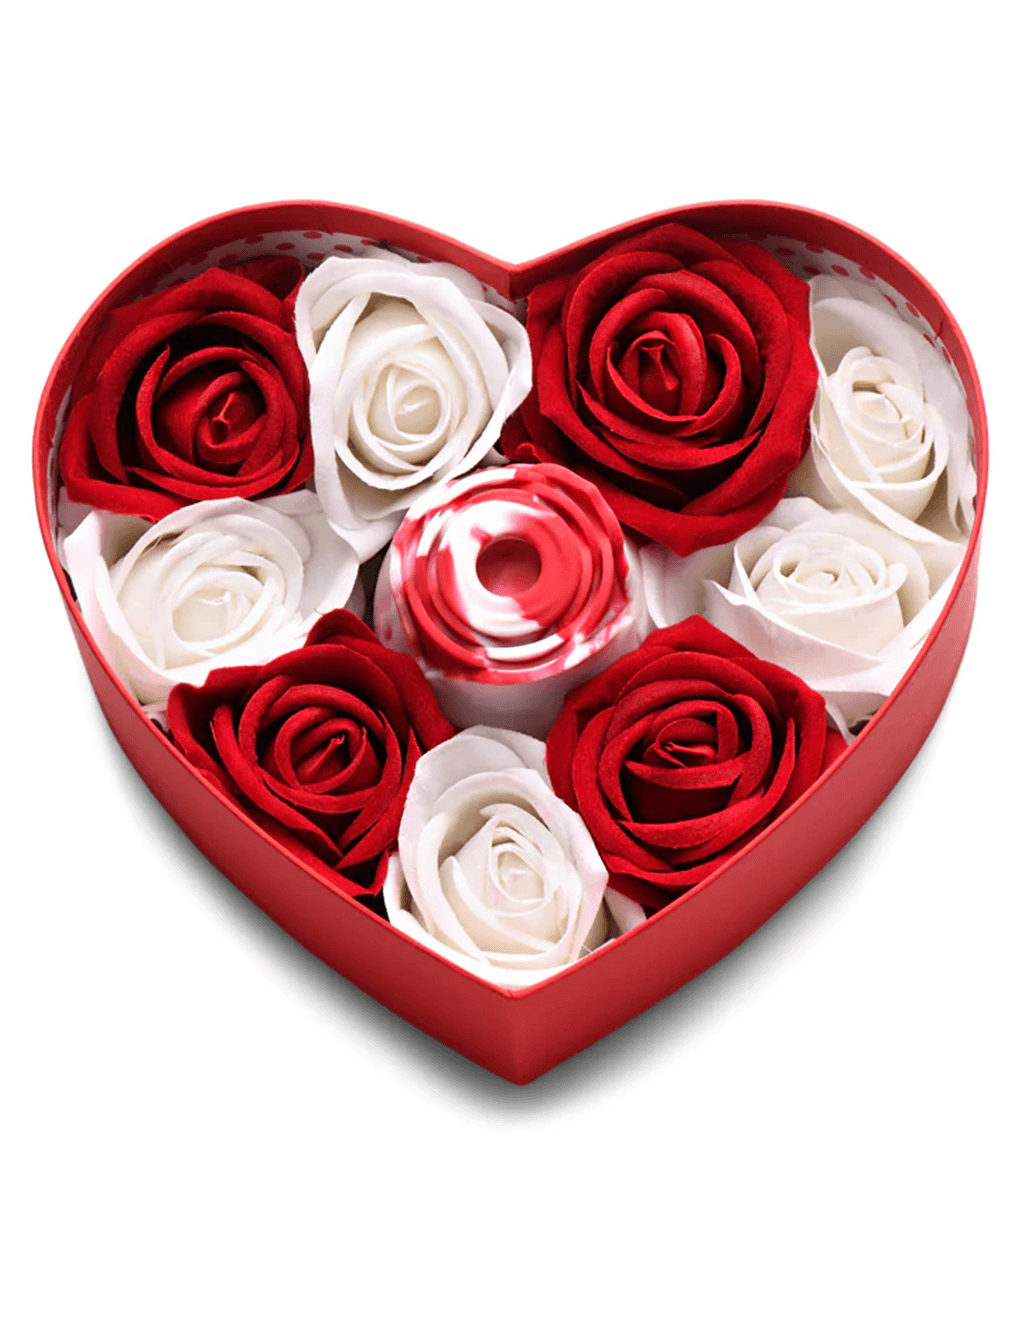 Bloomgasm Rose Lover's Gift Box - Swirl - Main